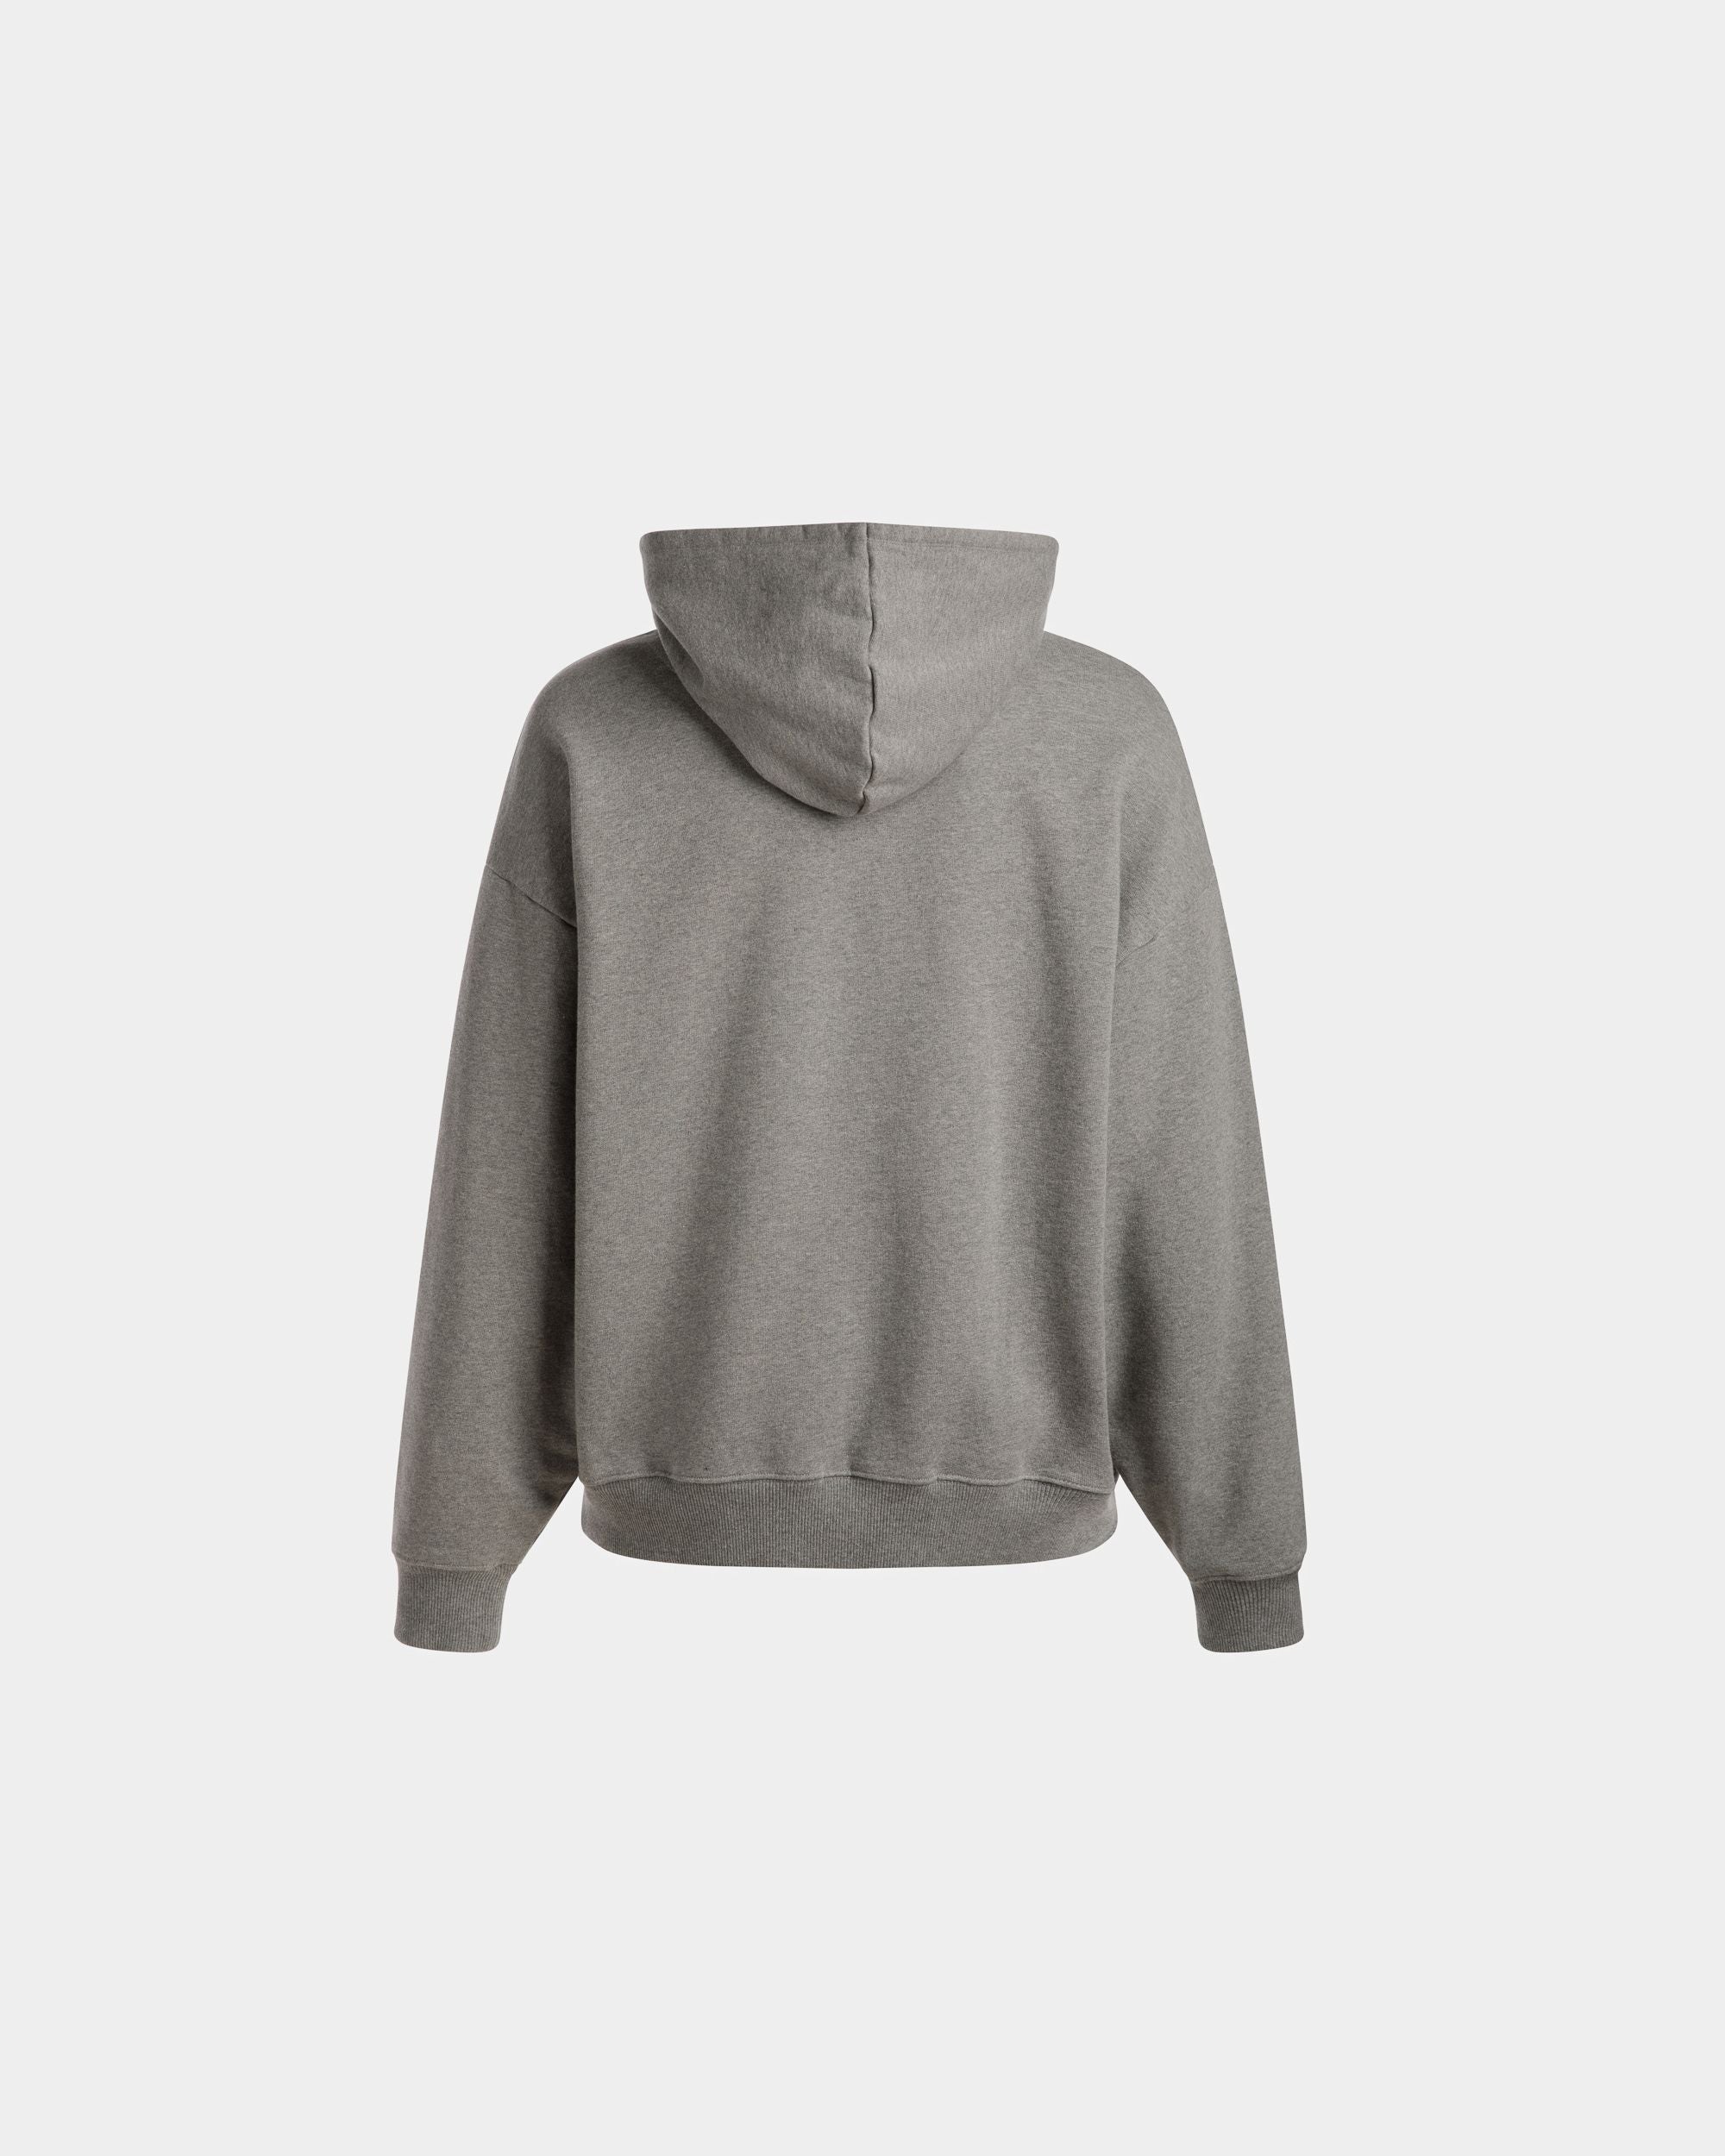 Logo Hooded Sweatshirt | Men's Sweatshirt | Grey Melange Cotton | Bally | Still Life Back